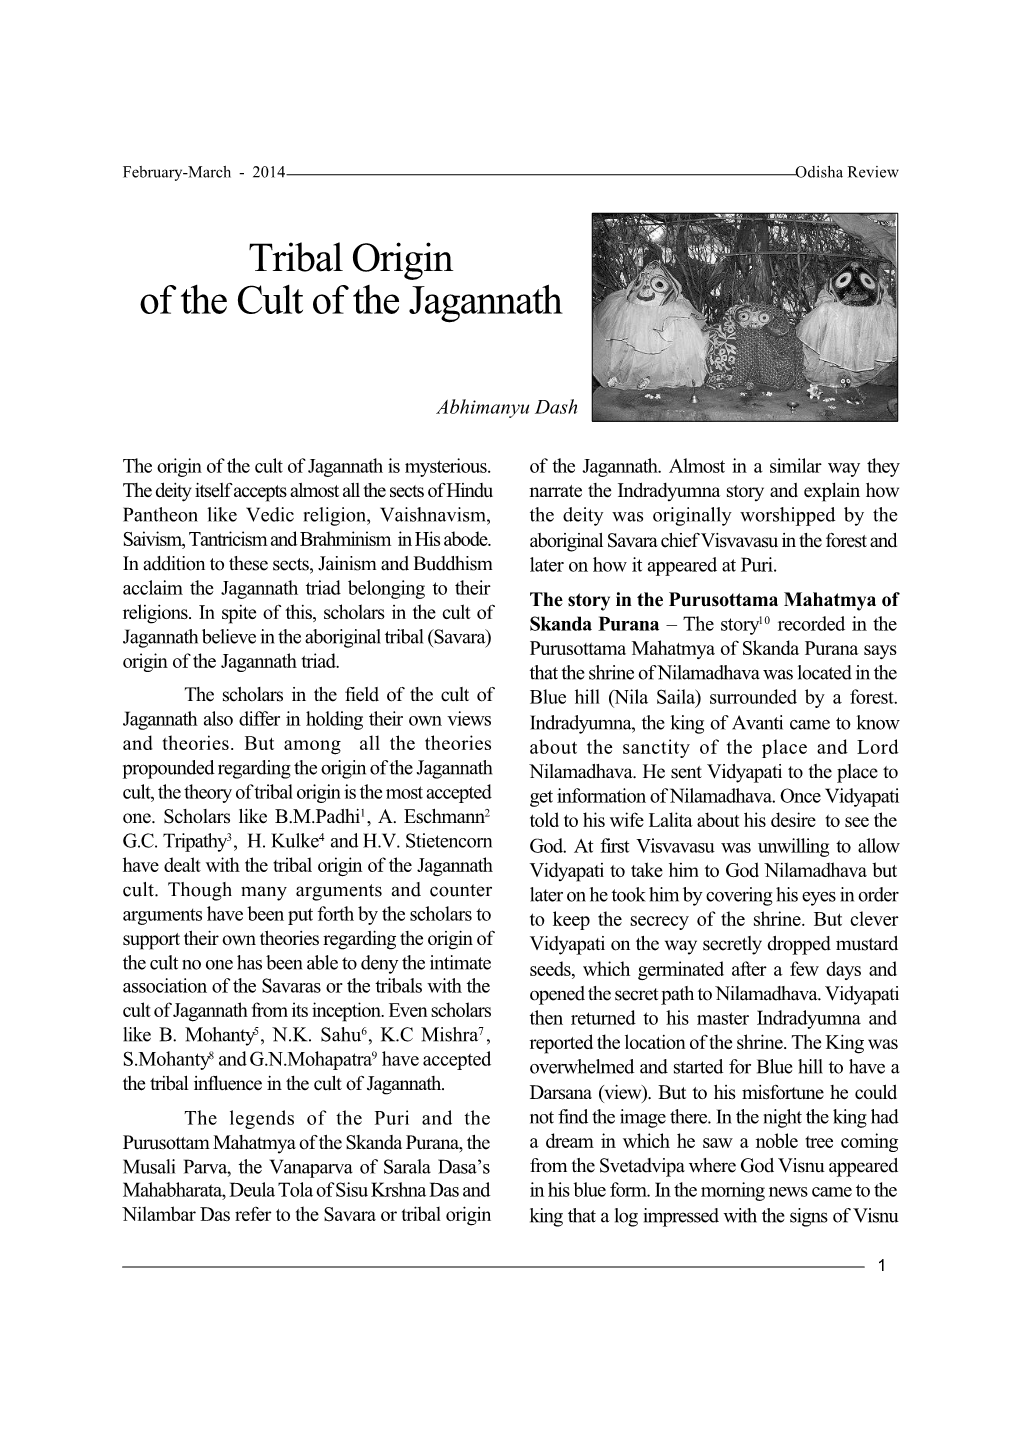 Tribal Origin of the Cult of the Jagannath